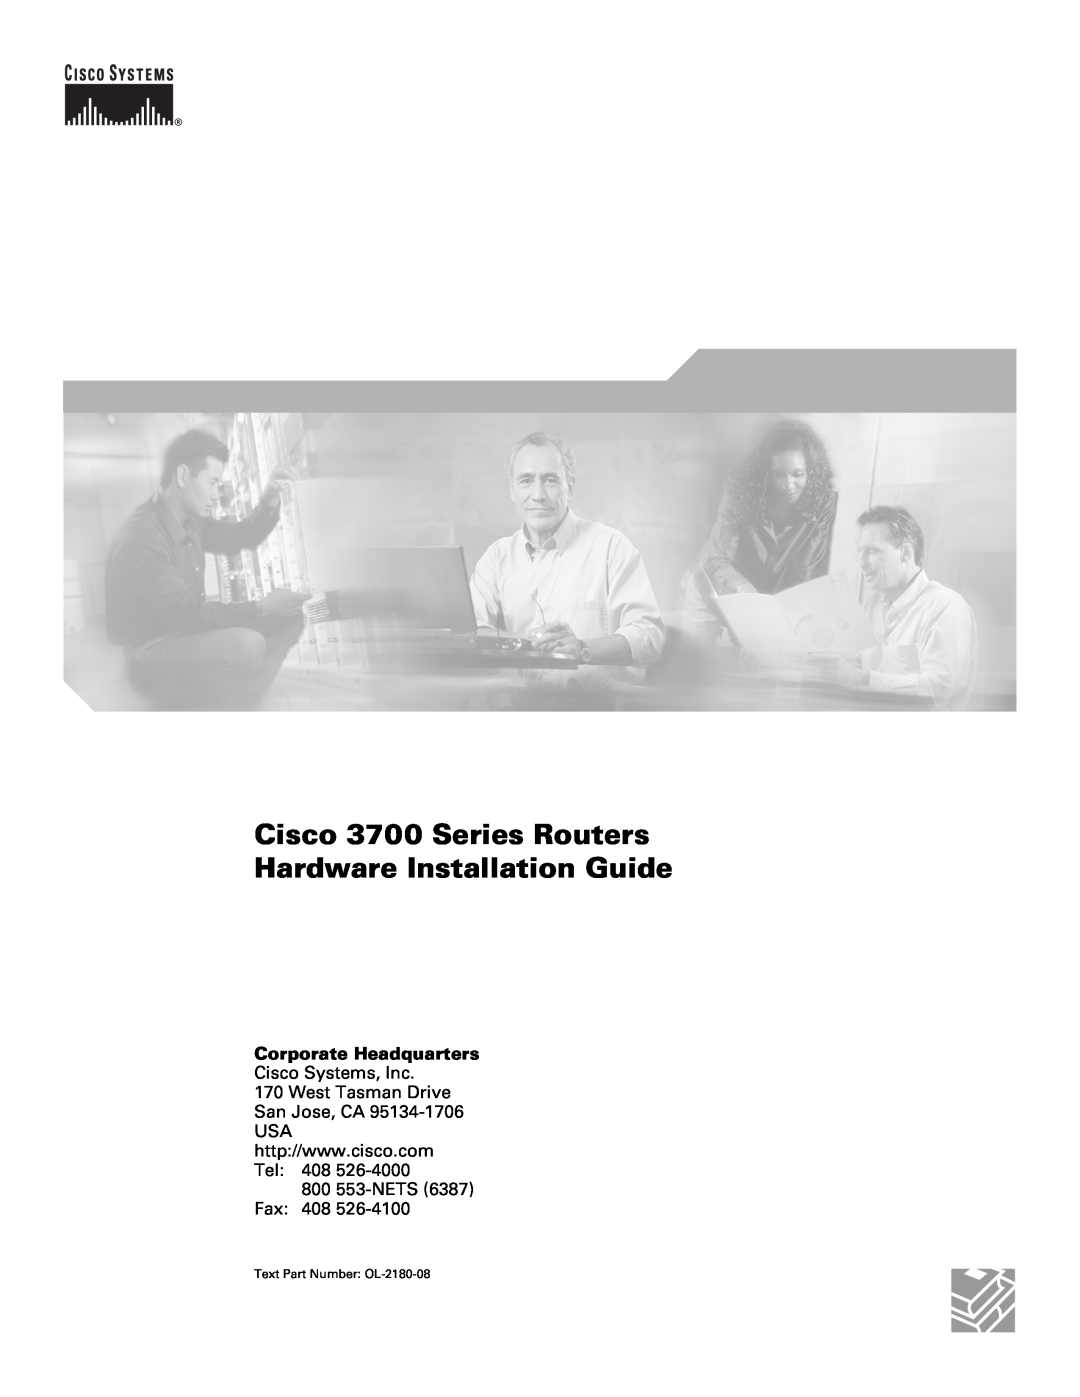 Cisco Systems 3700 Series manual Cisco Systems, Inc 170 West Tasman Drive San Jose, CA, 800 553-NETS Fax 408 